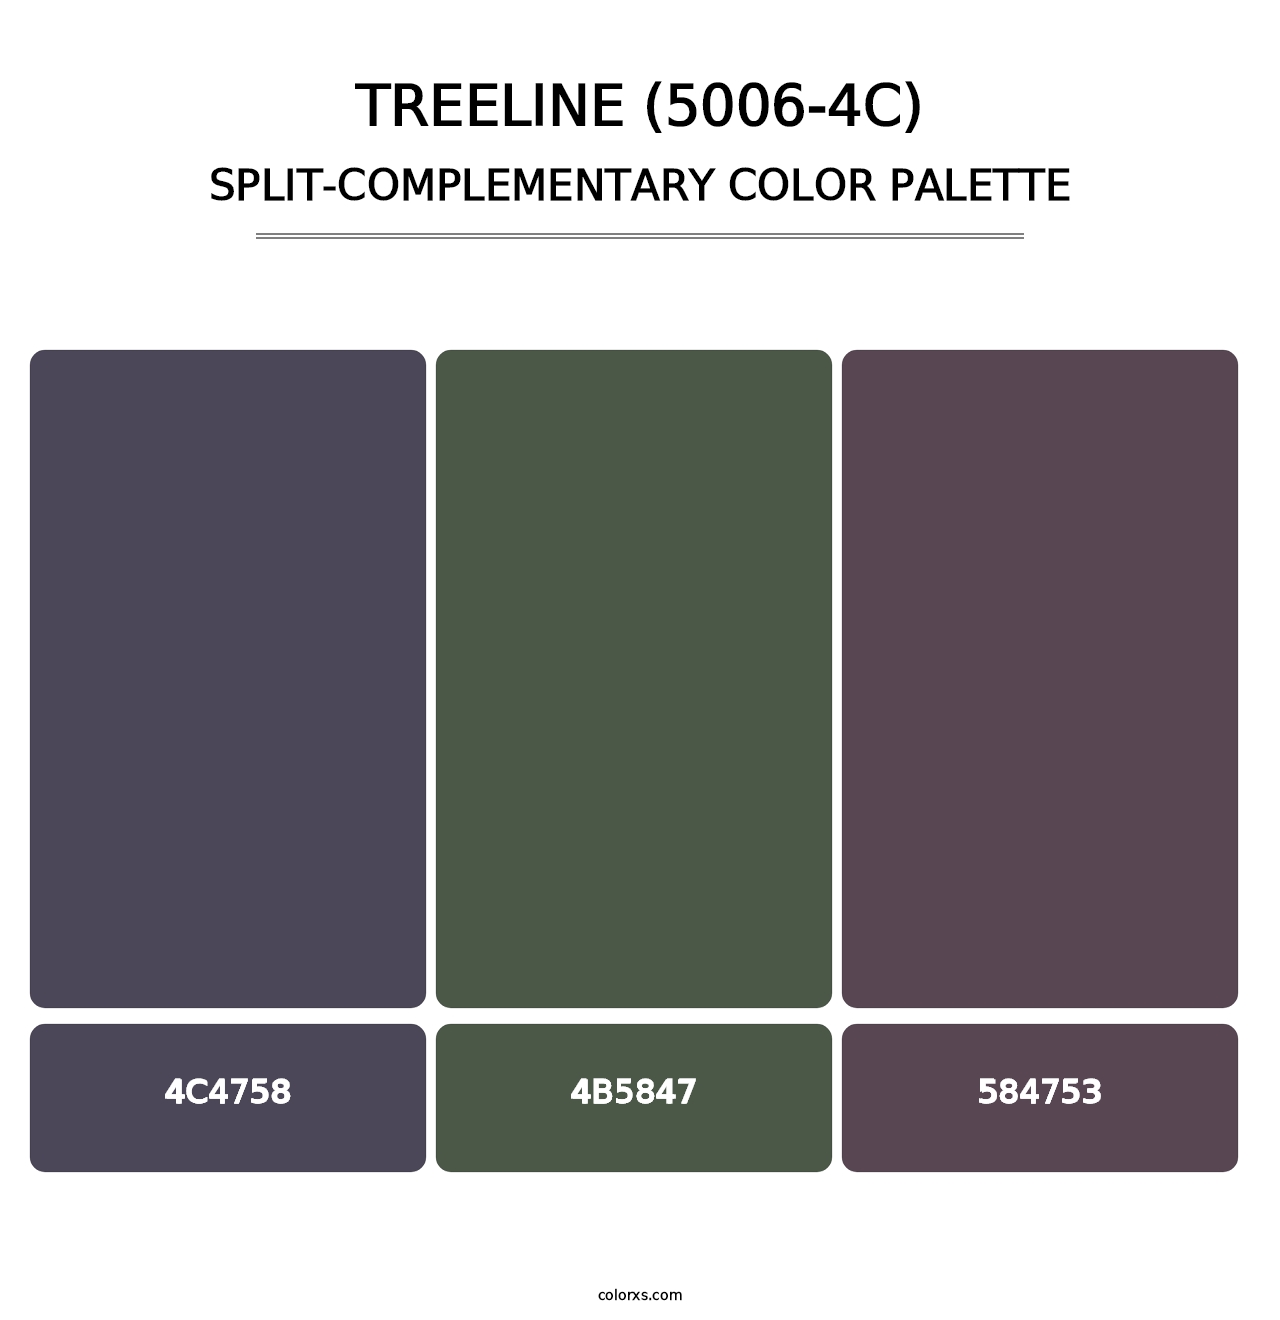 Treeline (5006-4C) - Split-Complementary Color Palette